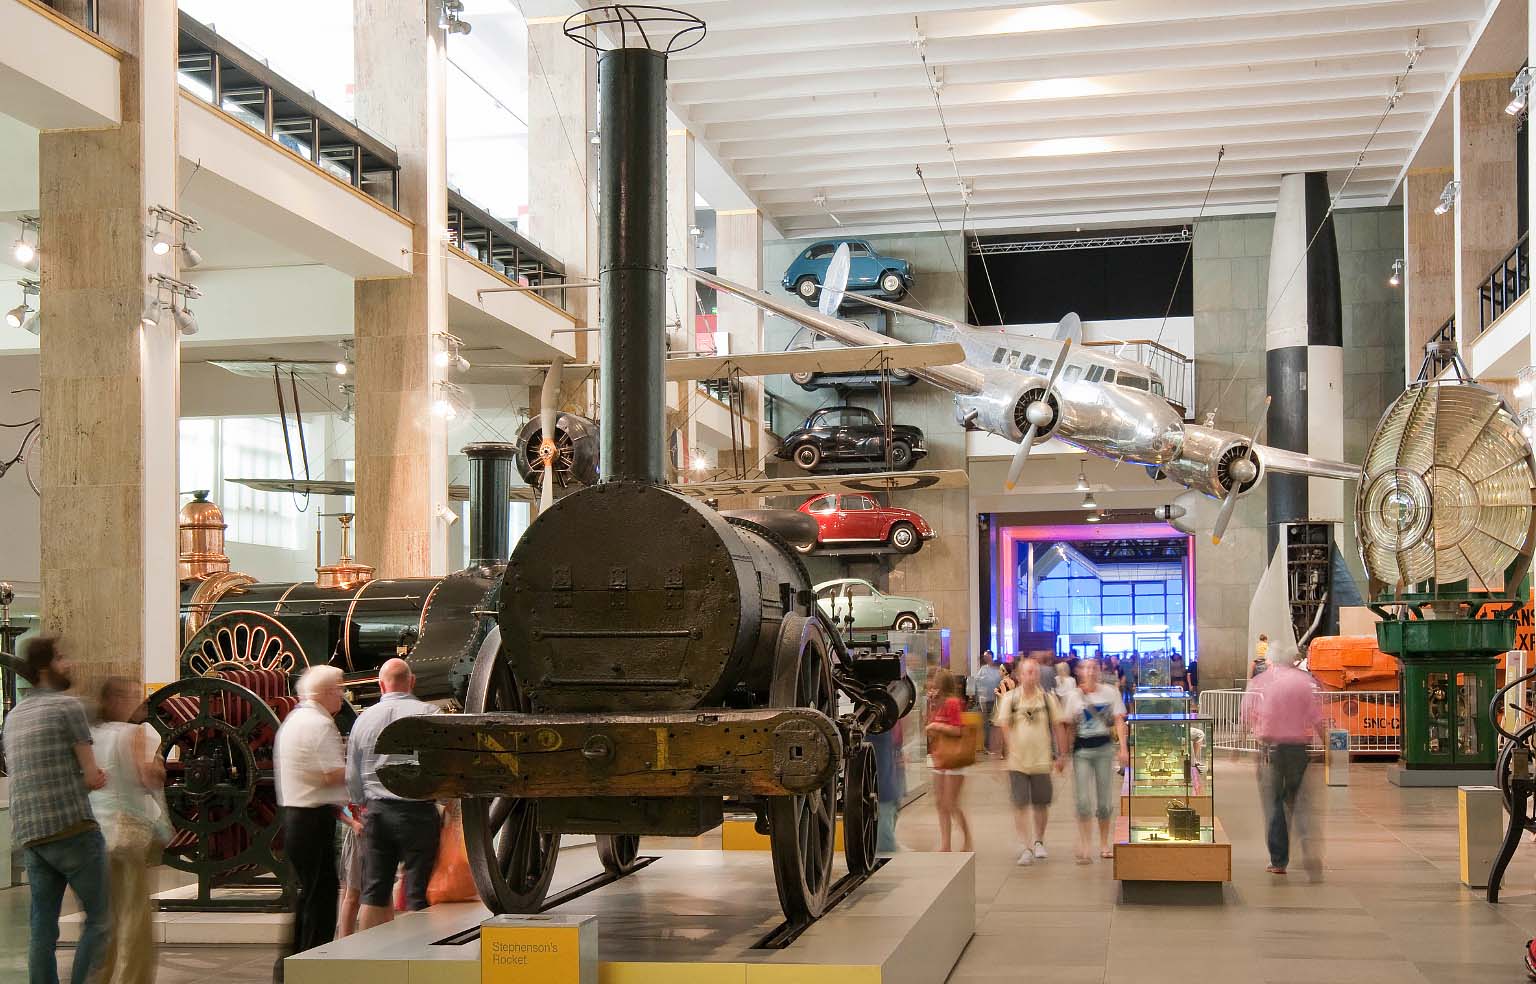 Steam museum in london фото 52